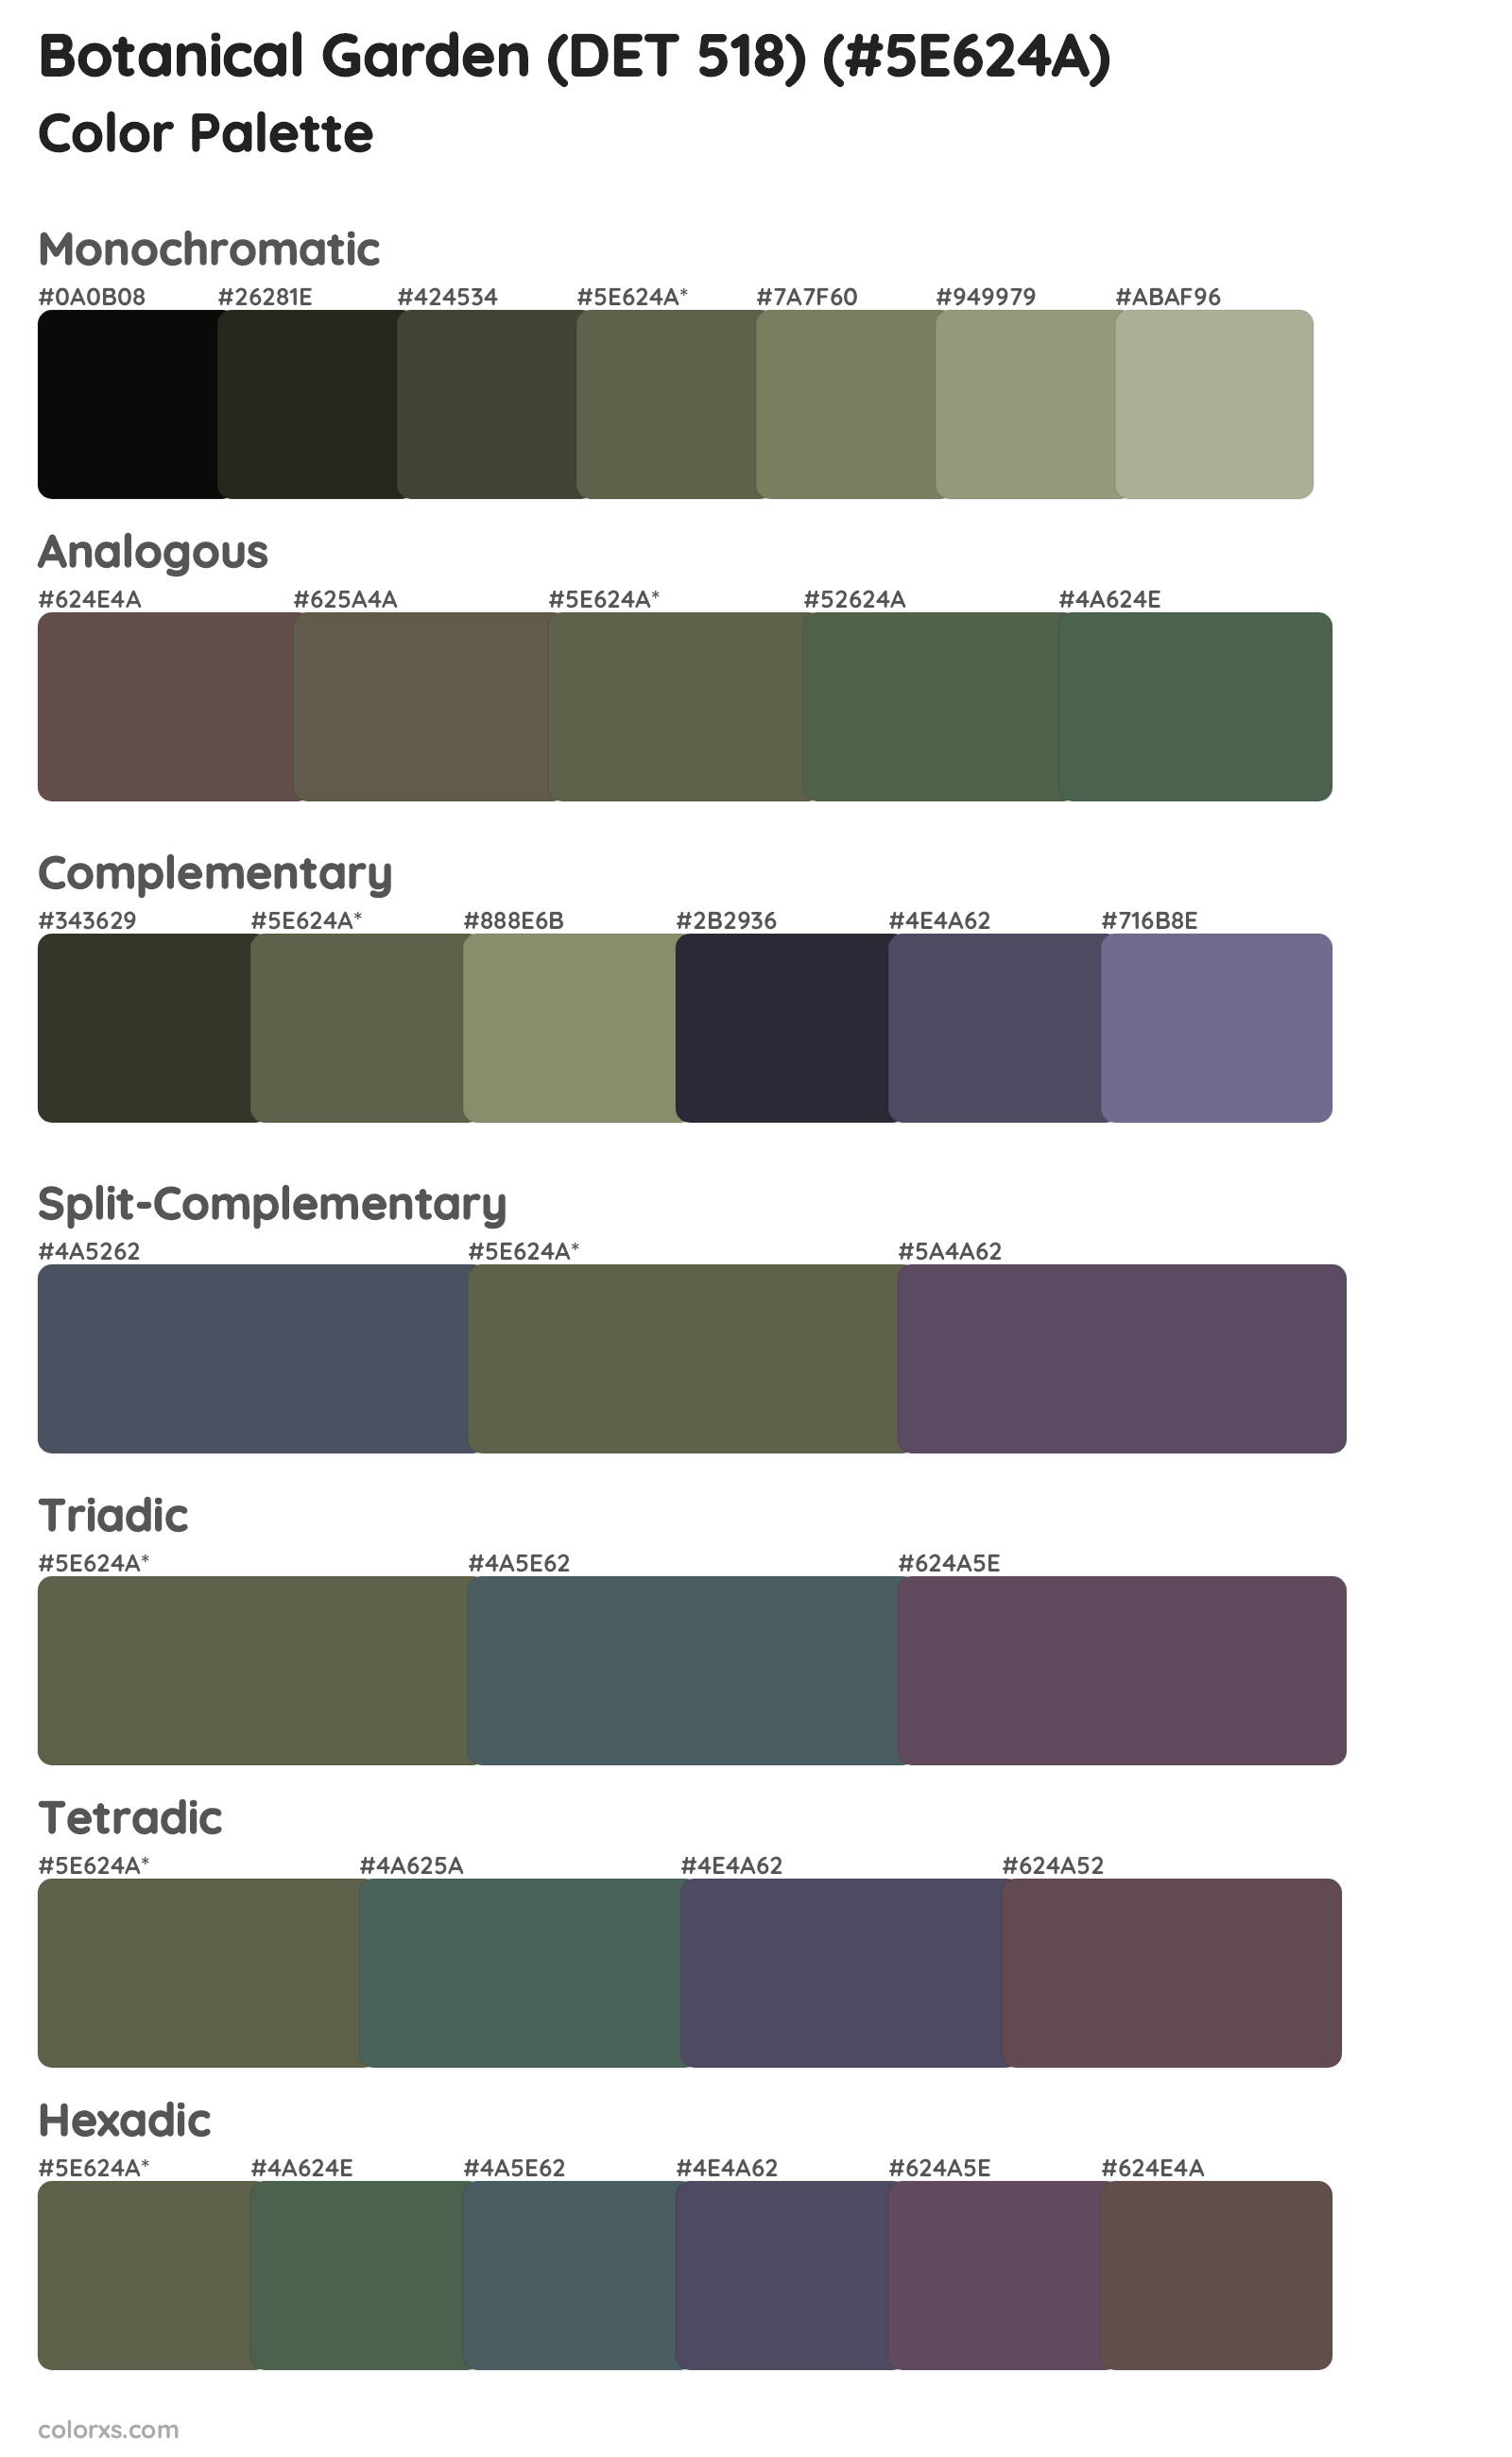 Botanical Garden (DET 518) Color Scheme Palettes